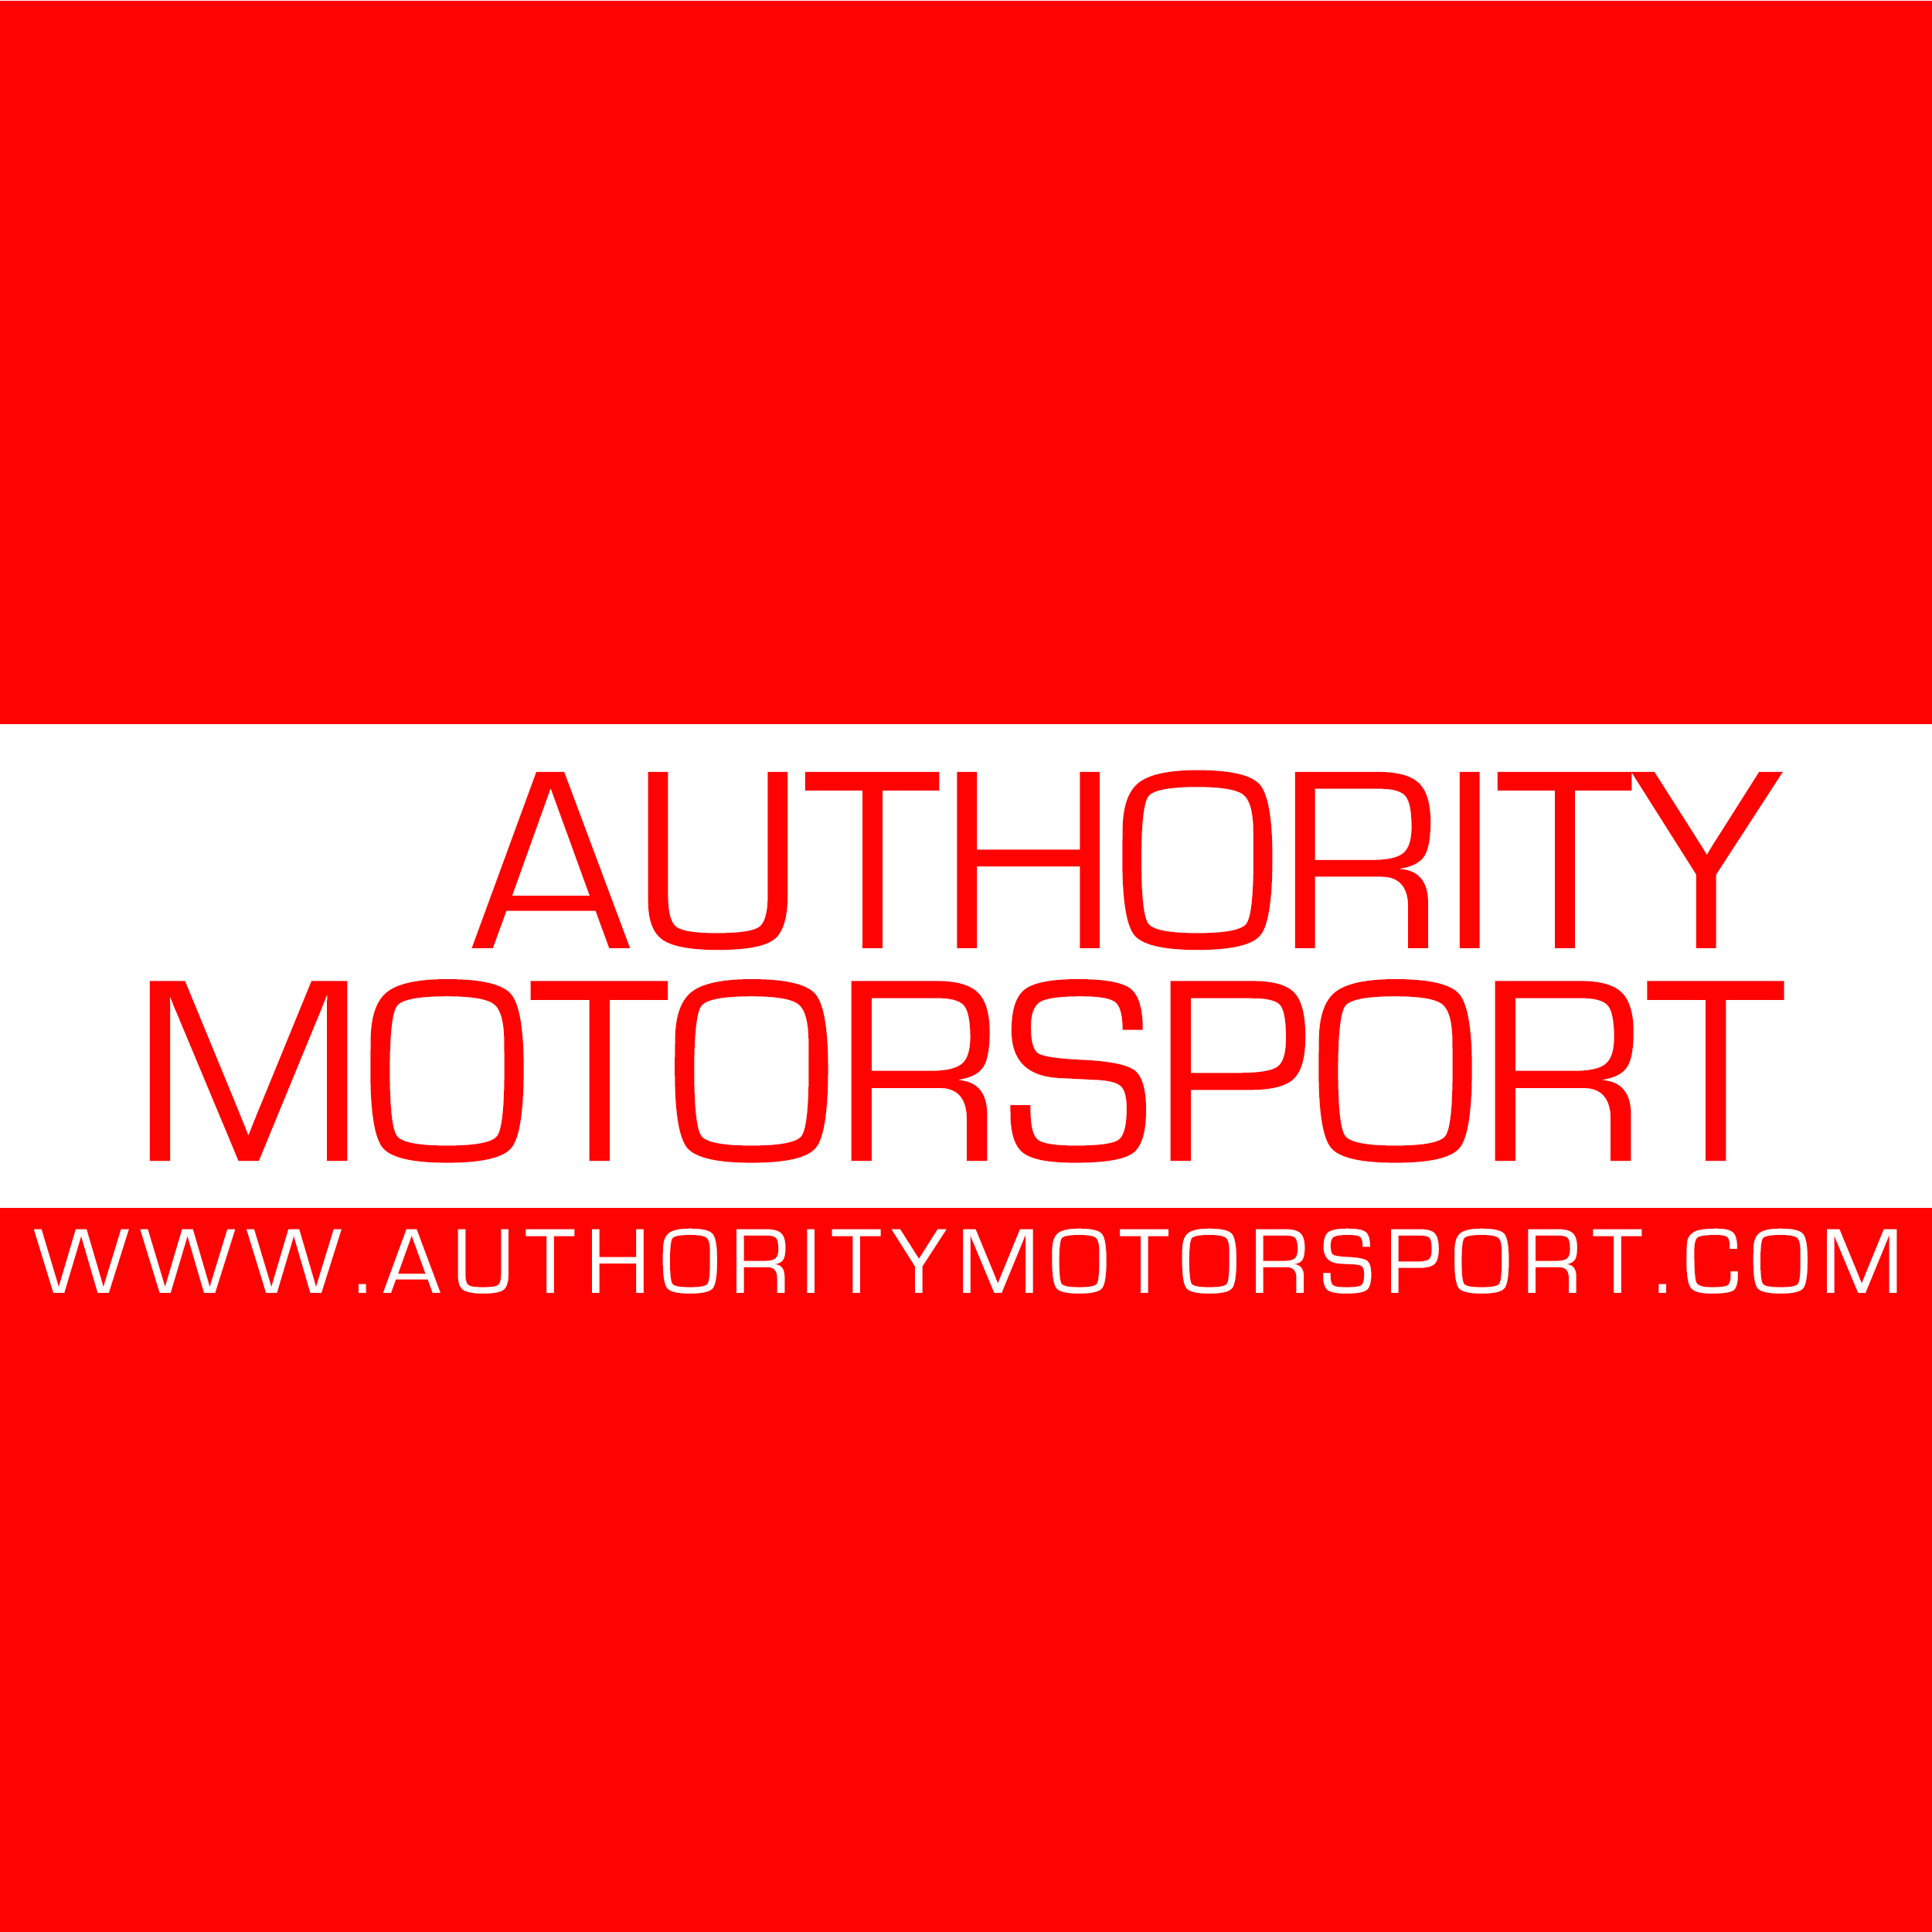 Authority Motorsport